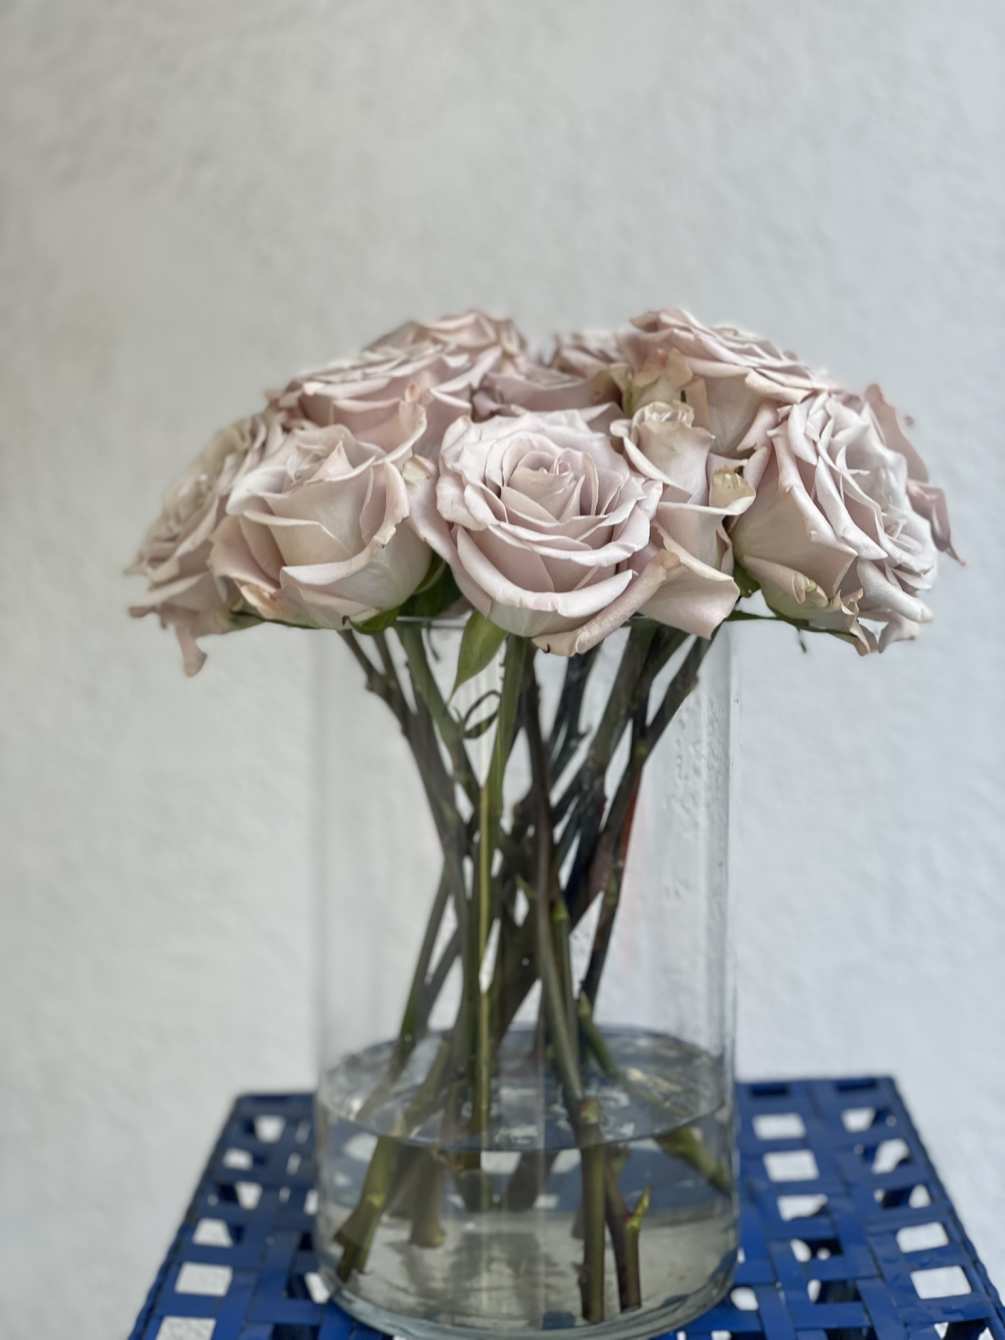 13 Gorgeous and unique quicksand roses arranged in an elegant vase